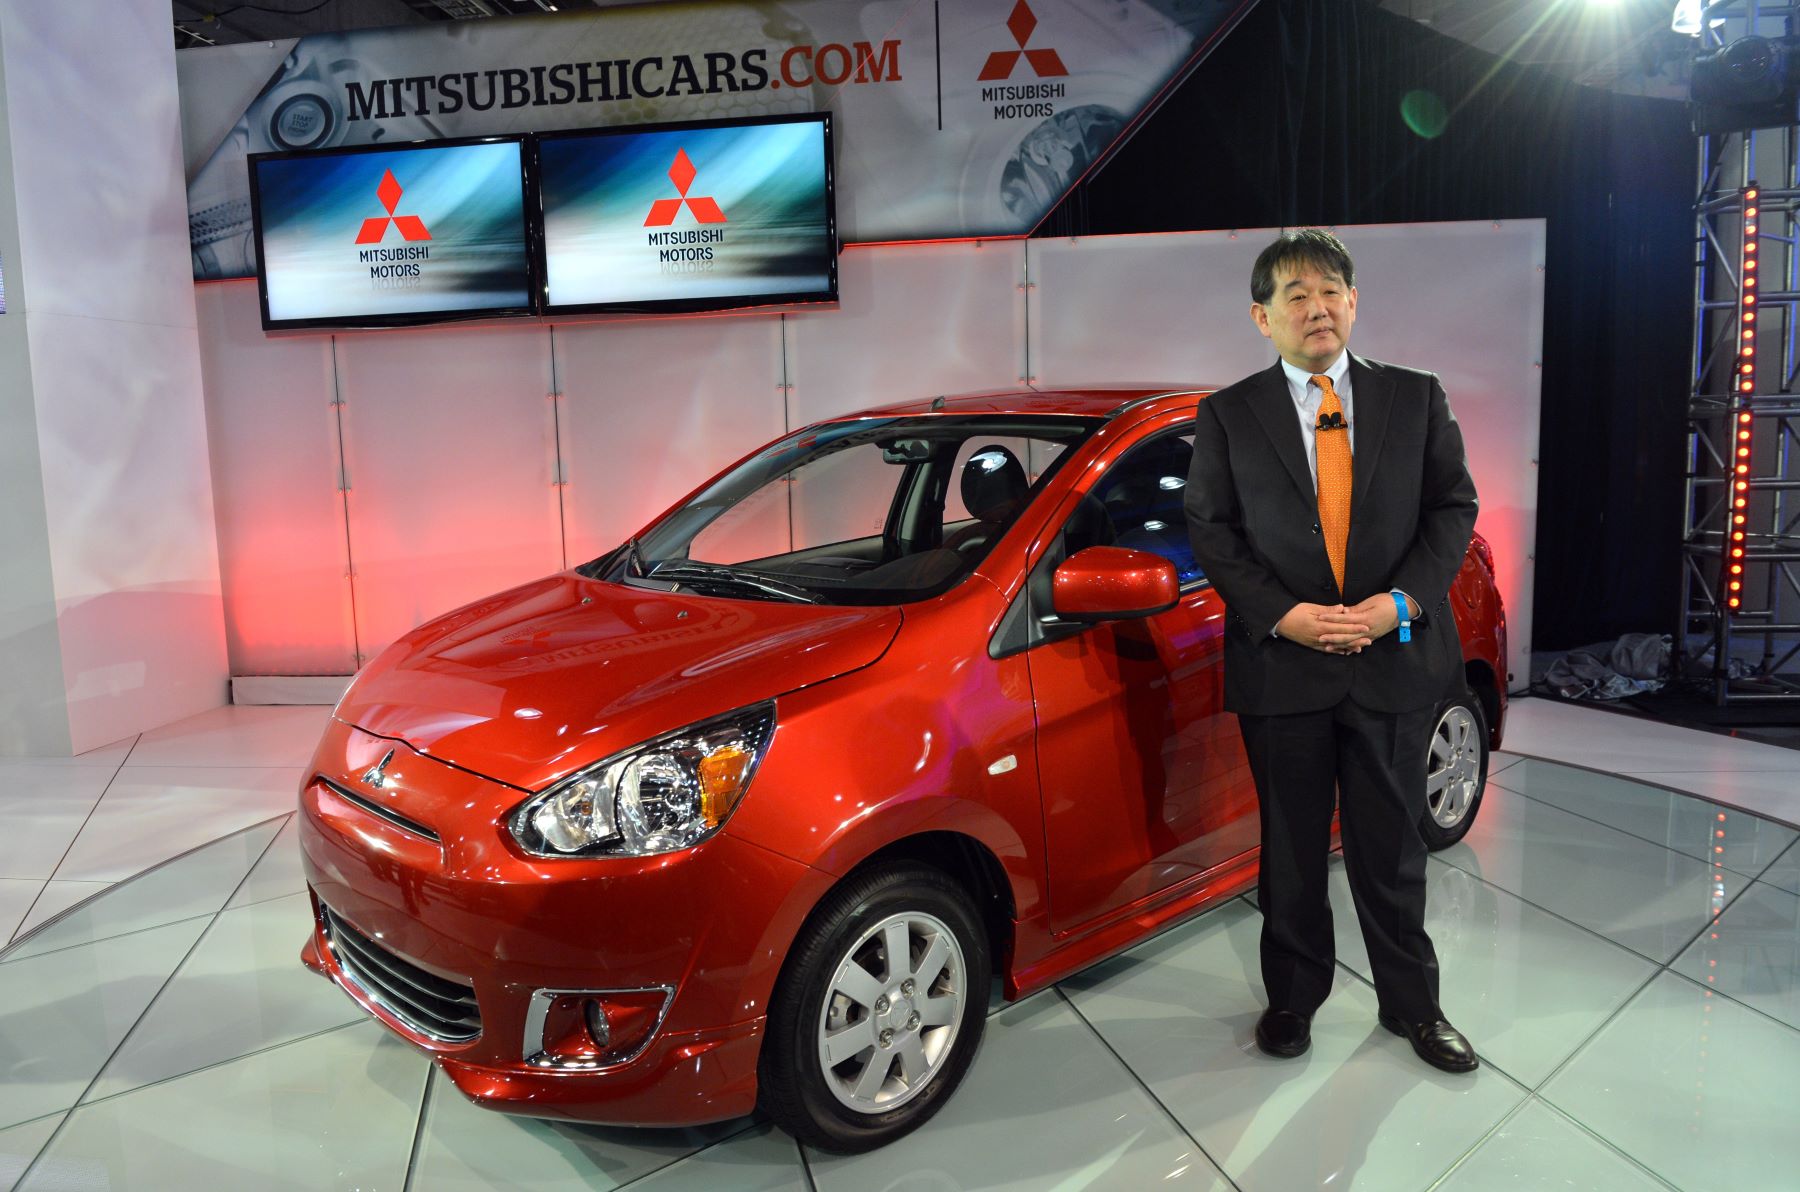 The 2014 Mitsubishi premiering at the New York Auto Show with Mitsubishi Motors CEO Yoichi Yokozawa